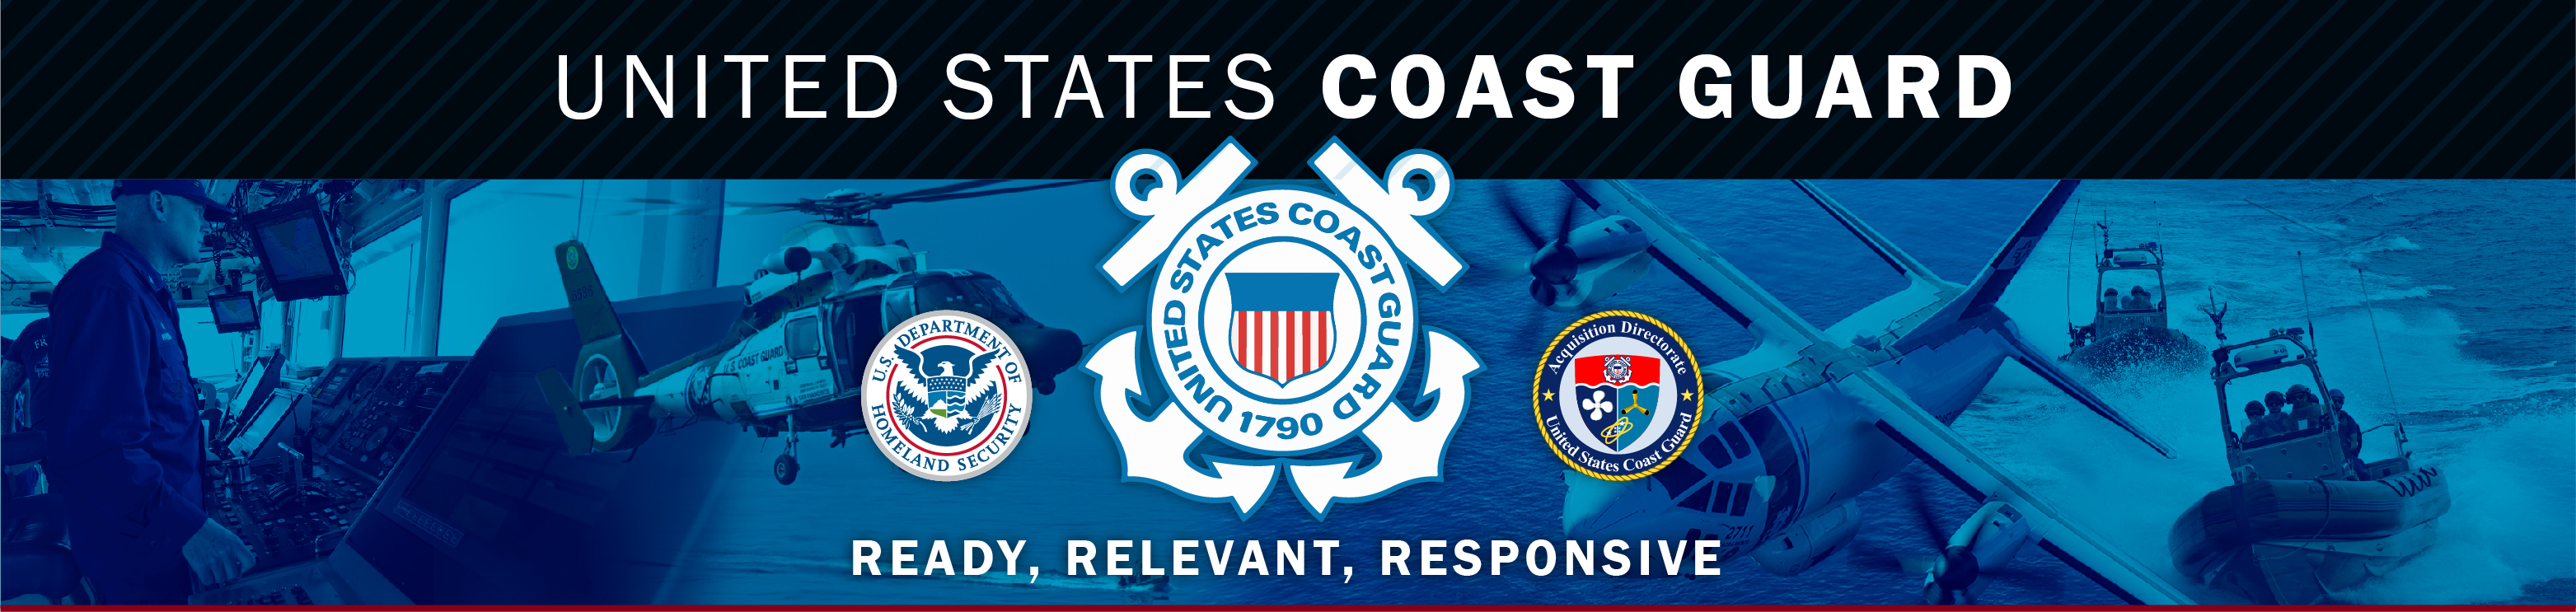 Coast Guard Presentations at Sea Air Space 2021